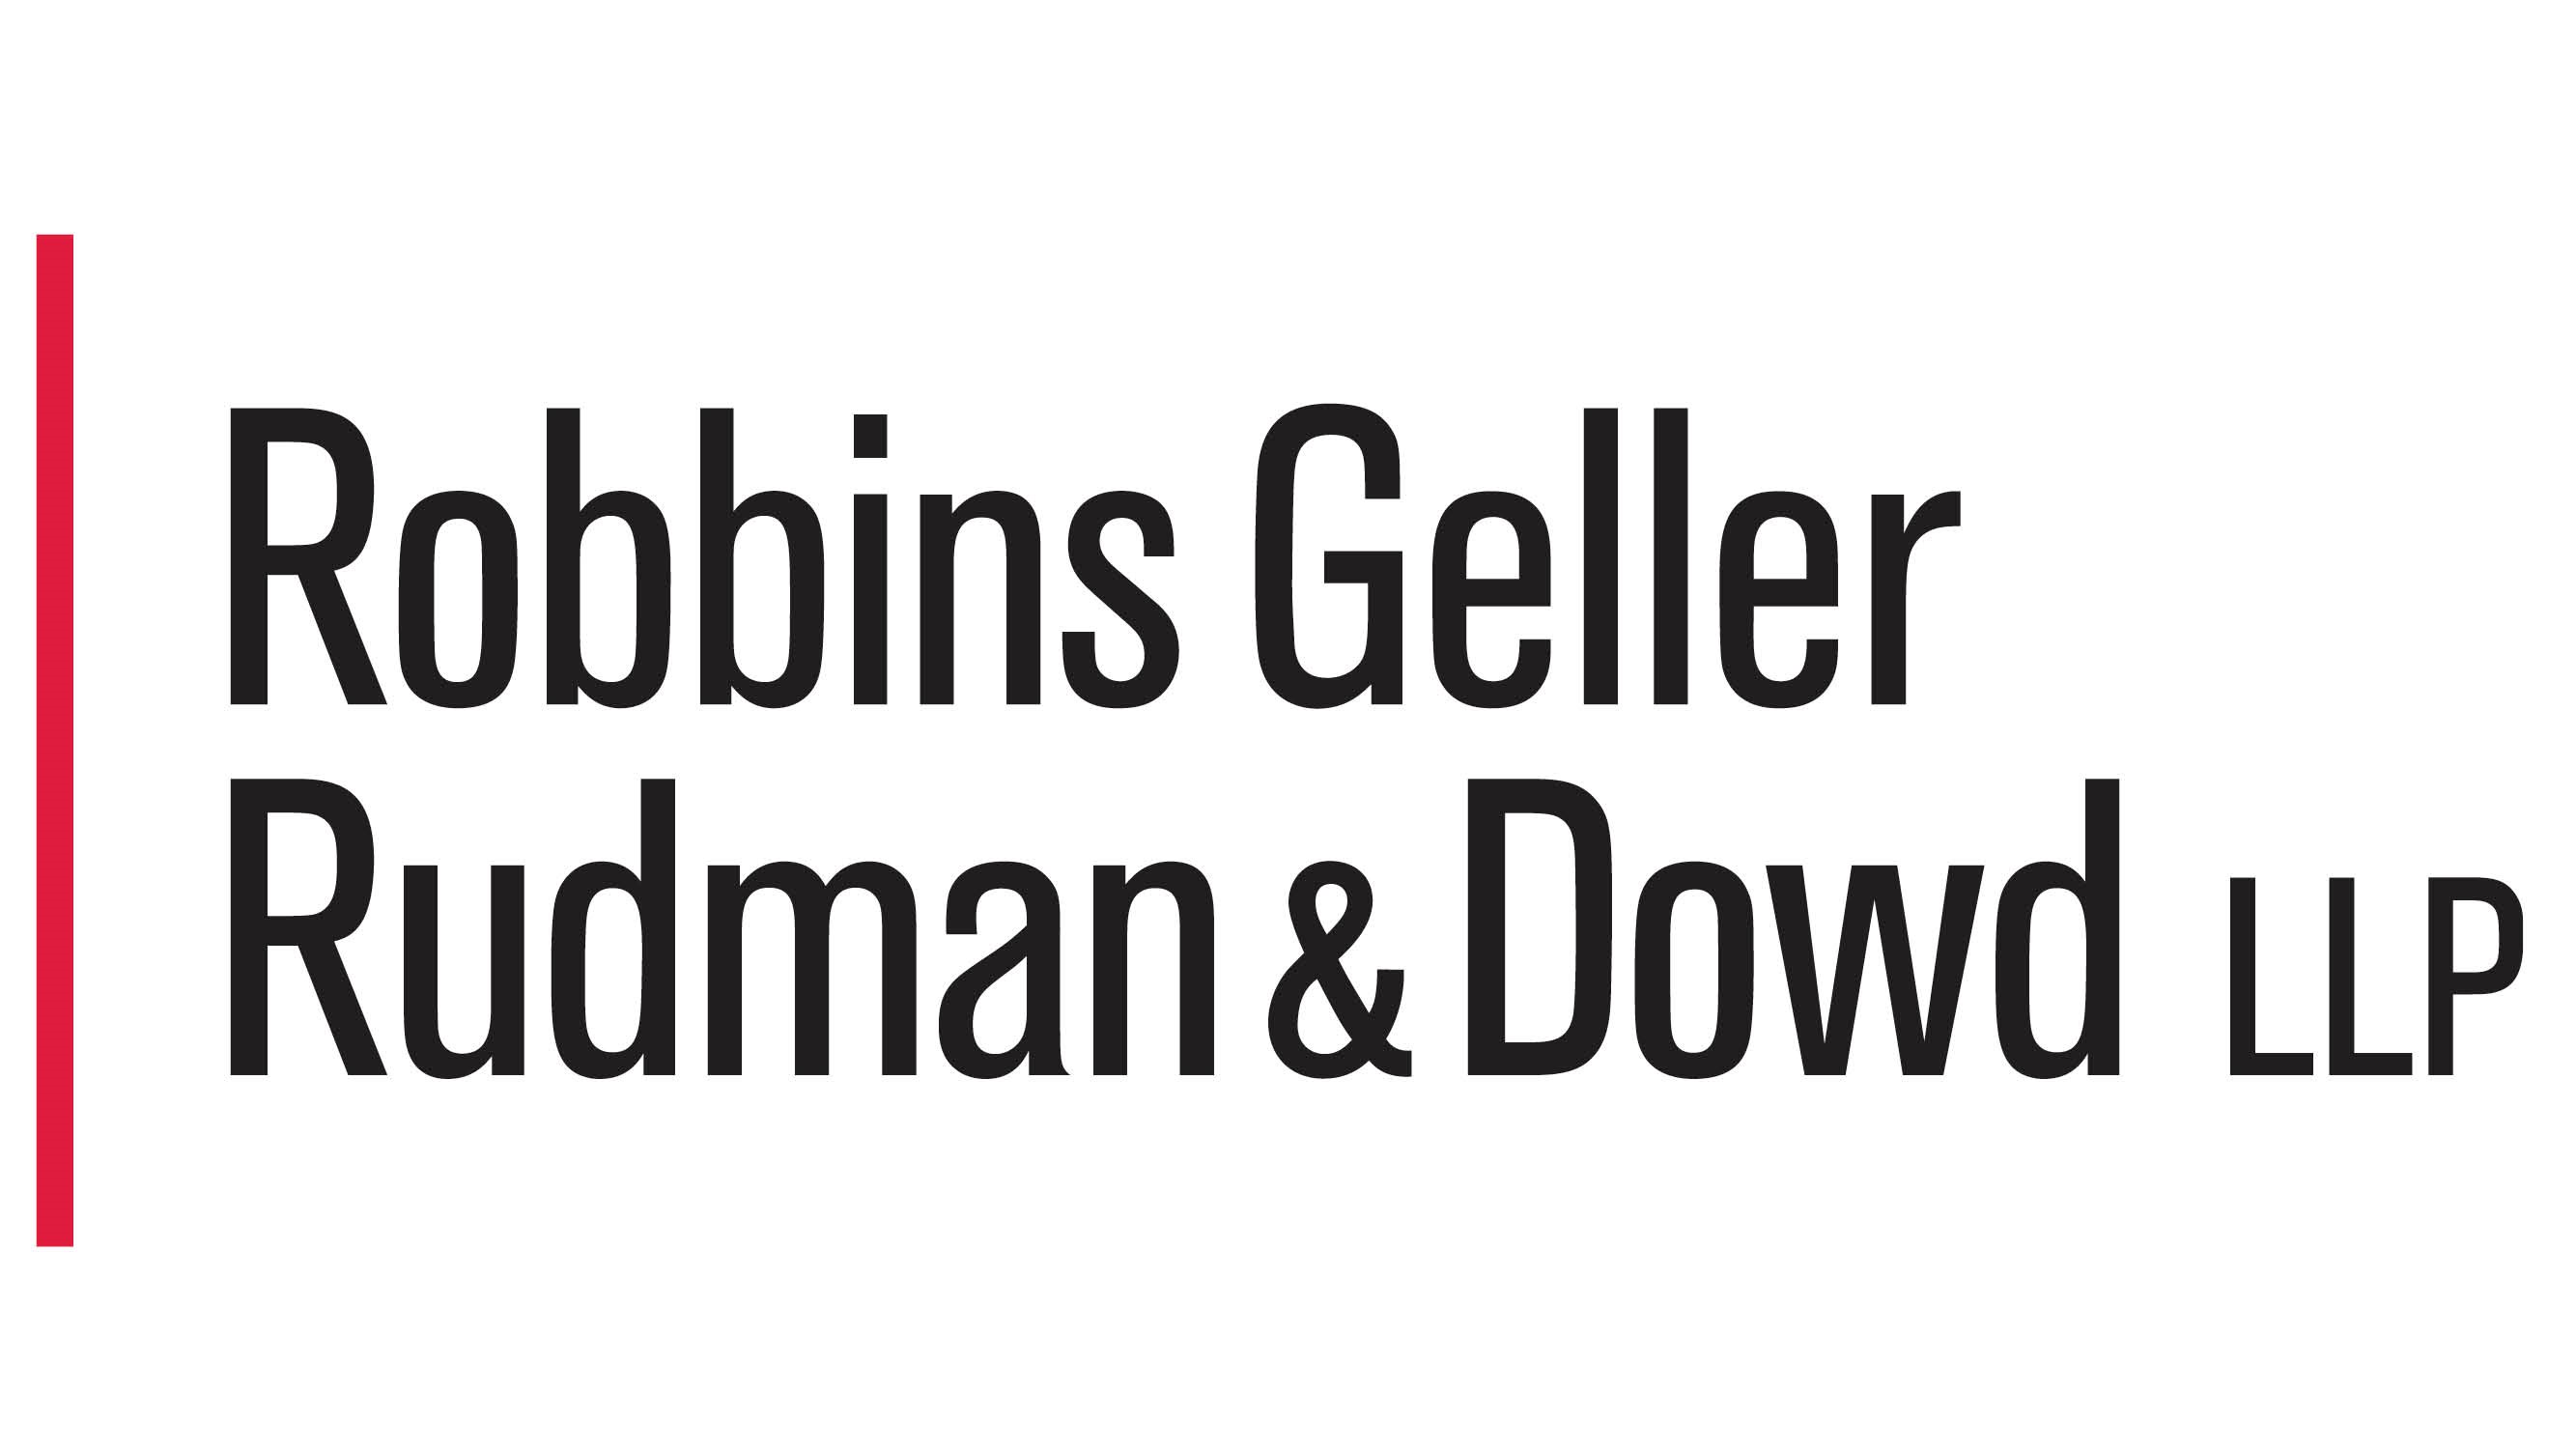 Robbins Geller Rudman & Dowd LLP, Thursday, December 16, 2021, Press release picture